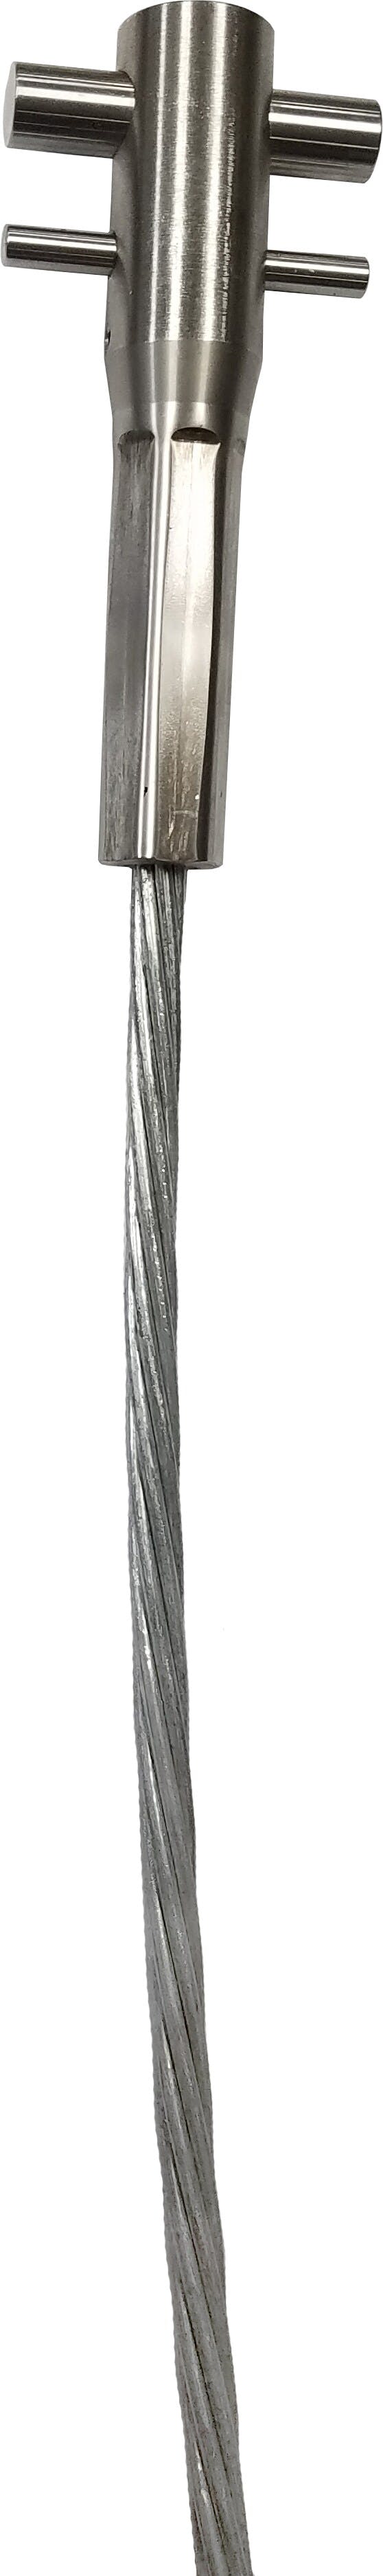 3M™ DBI-SALA® Lad-Saf™ Swaged Cable 6115003, 3/8 Inch, Galvanized Steel, 9m